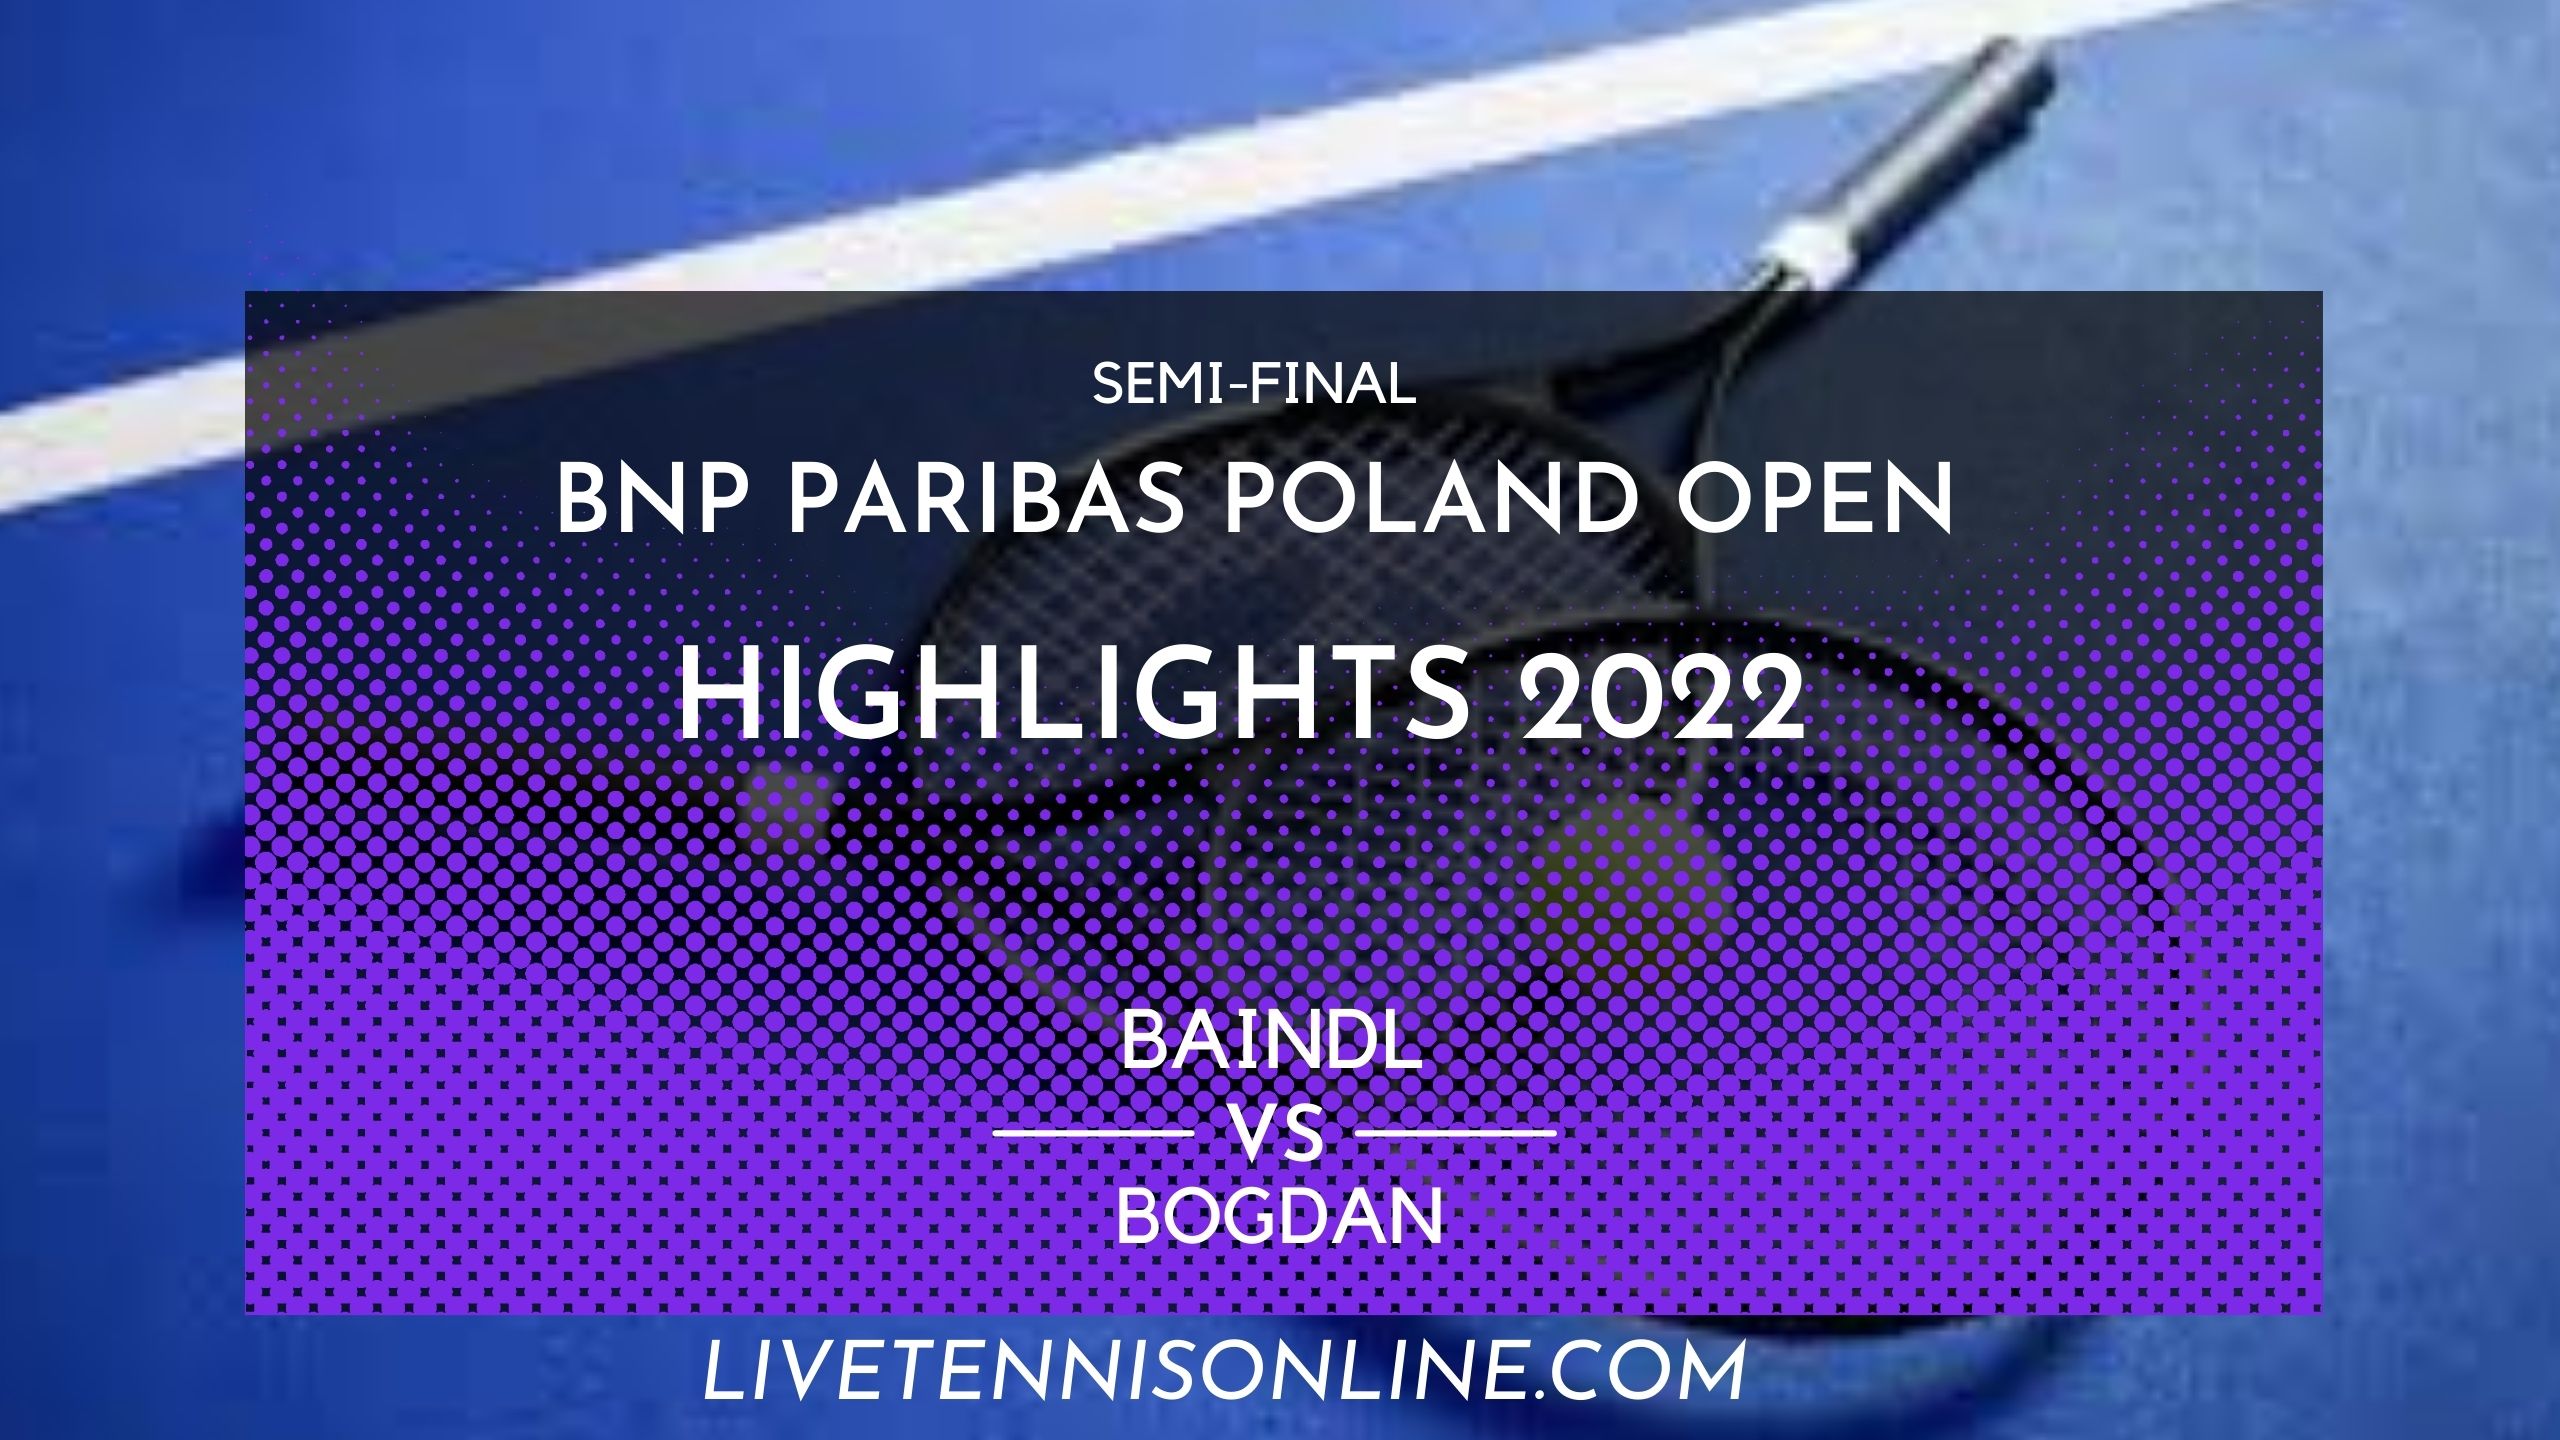 Baindl Vs Bogdan SF Highlights 2022 Poland Open